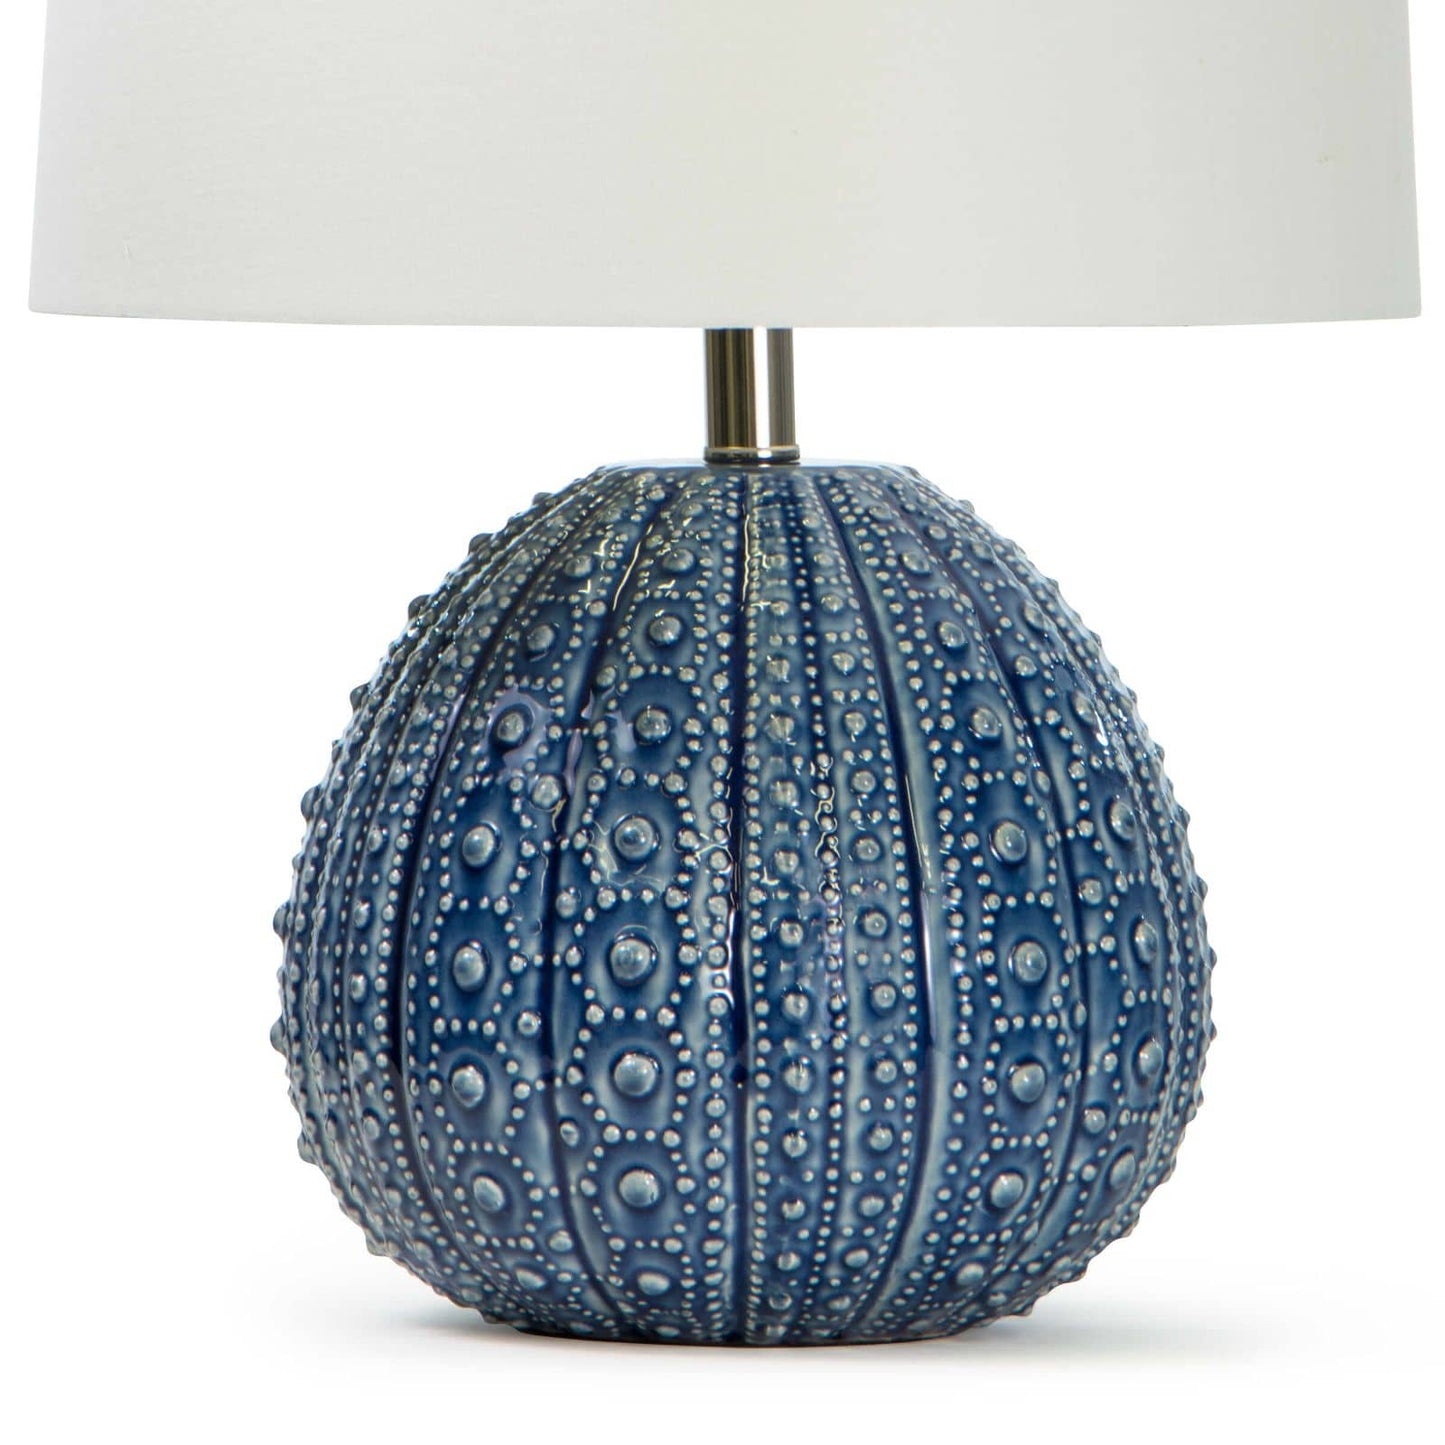 Sanibel Ceramic Table Lamp in Blue by Coastal Living